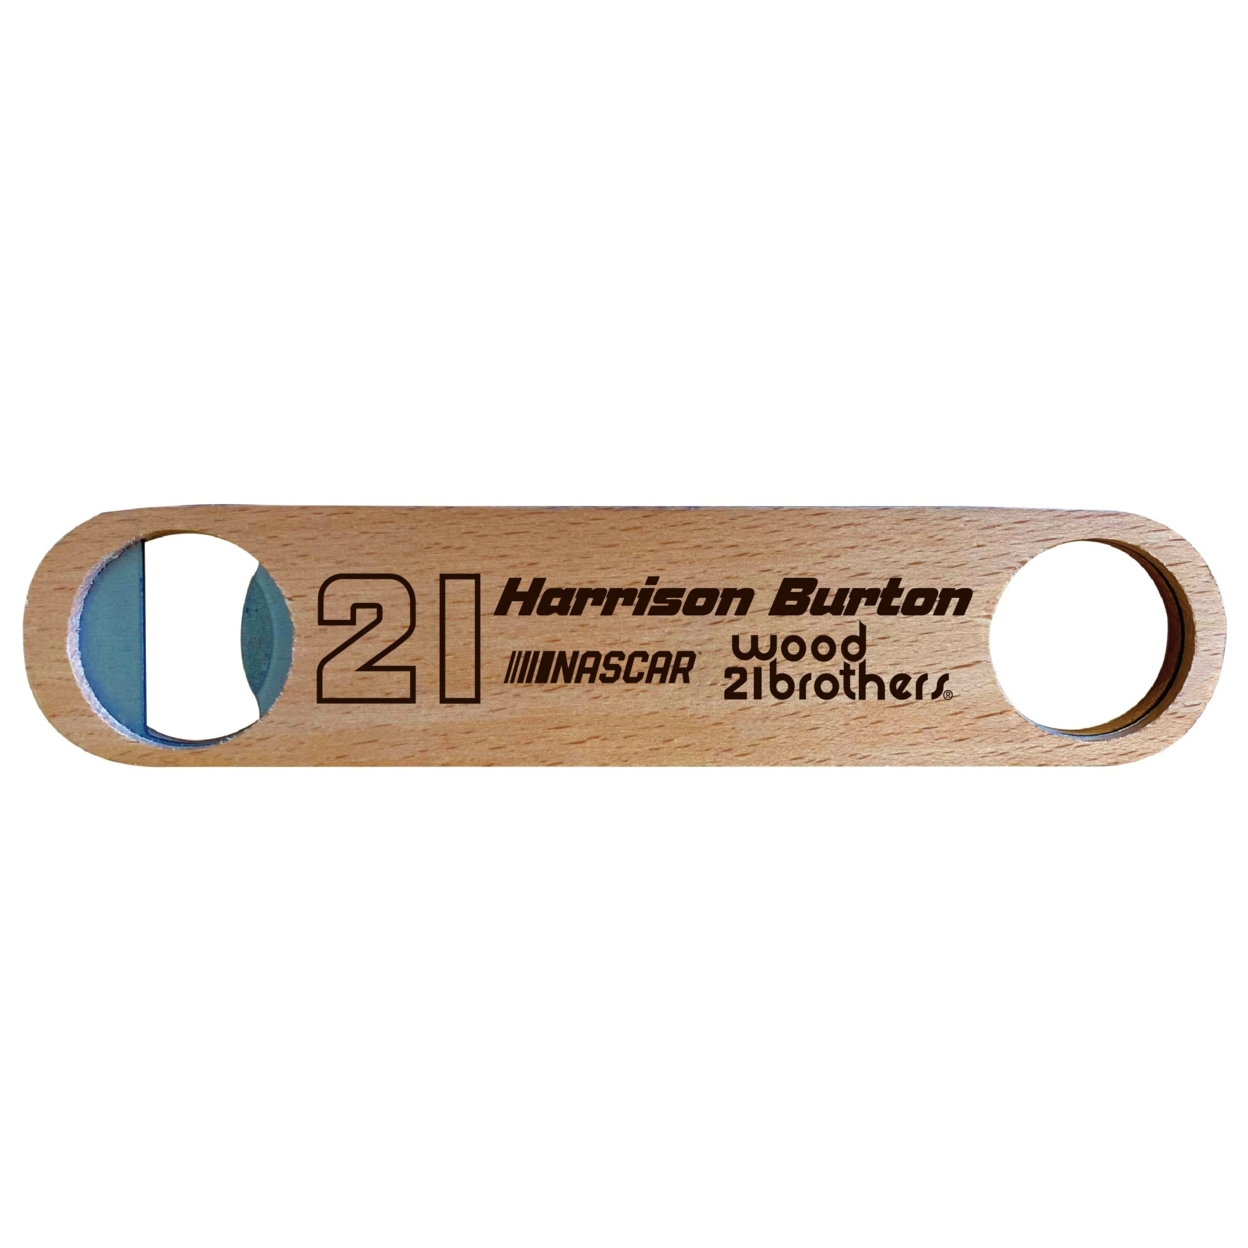 #21 Harrison Burton Laser Engraved Wooden Bottle Opener